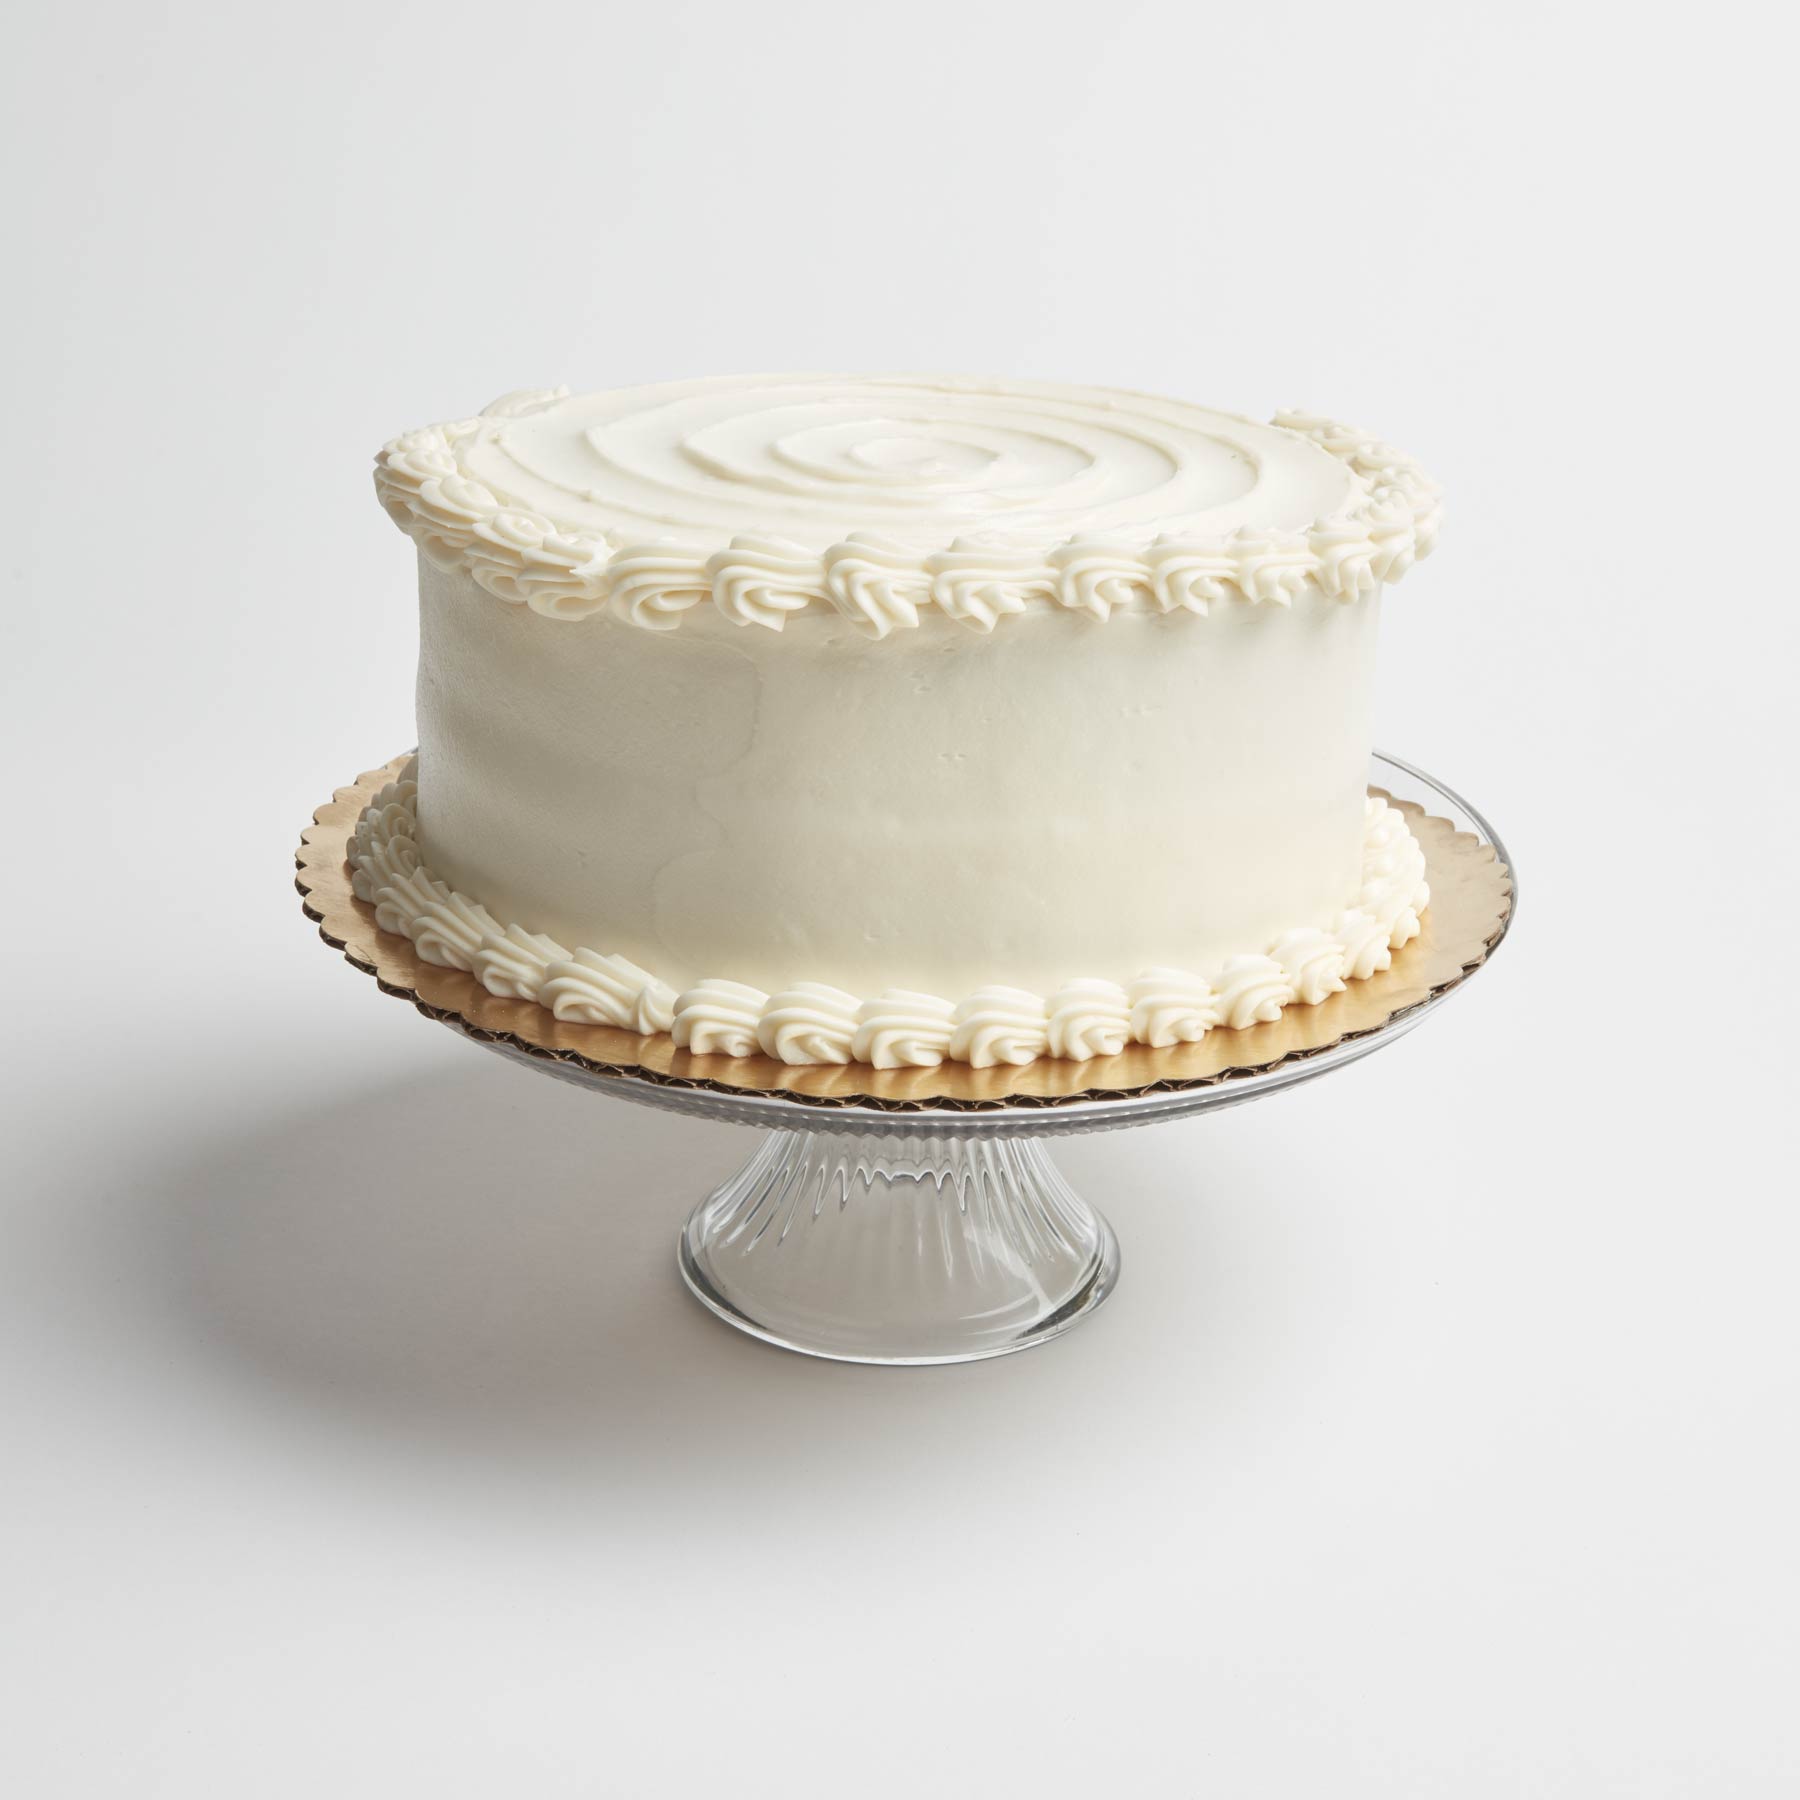 Online Round Shape Cakes | Round Cake Delvery